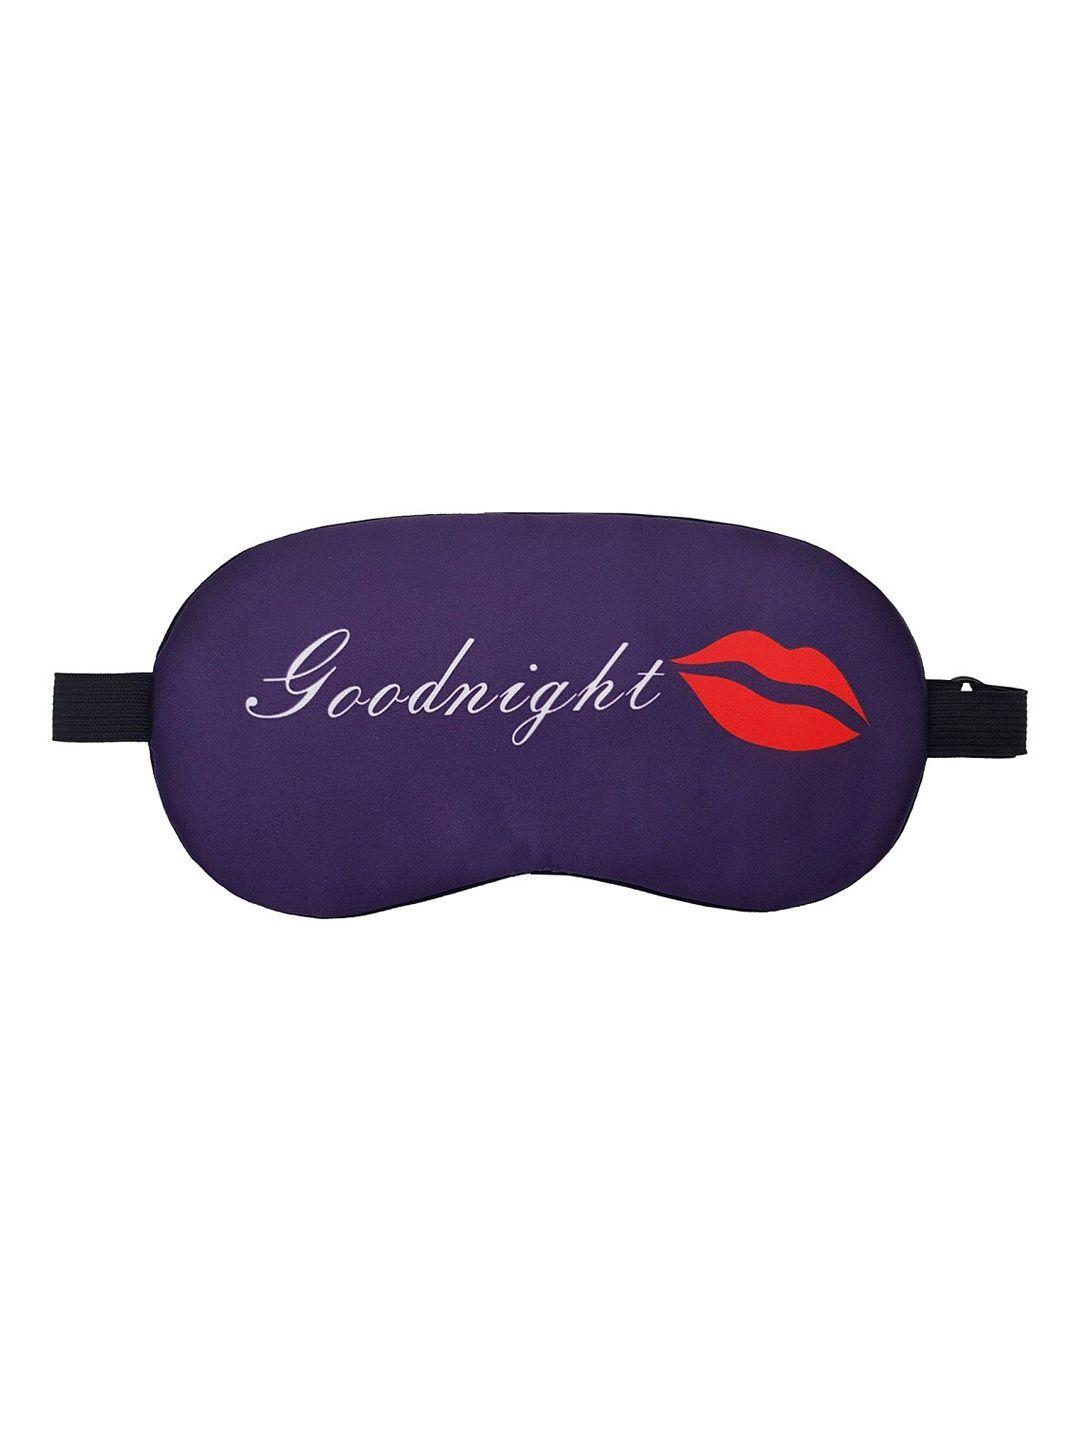 jenna good night printed sleeping eye mask